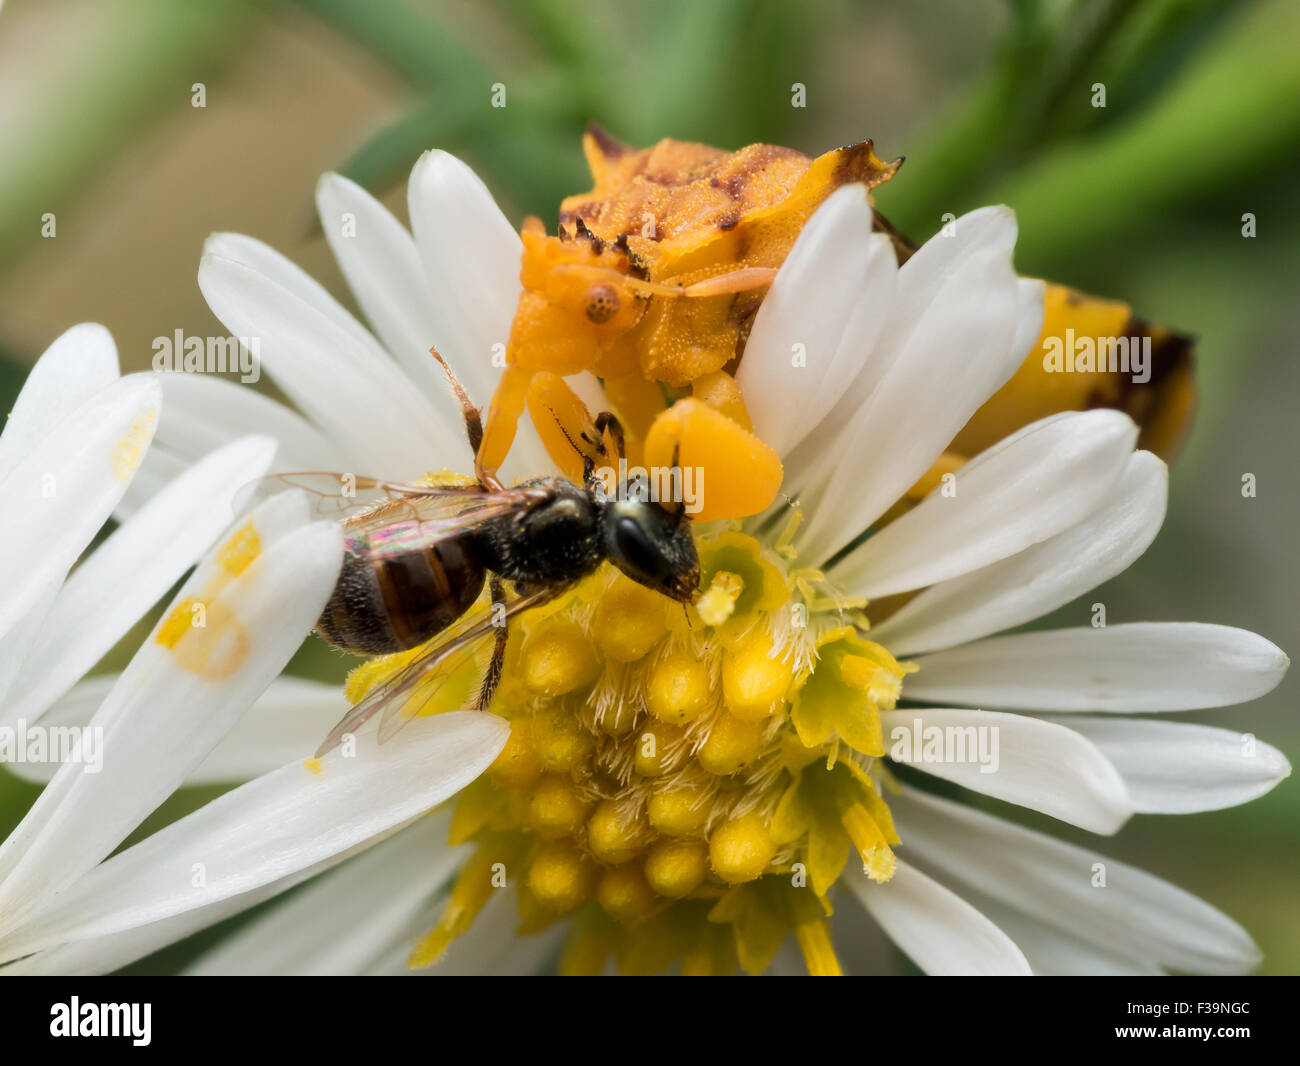 Yellow Ambush Bug Eats Wasp on white aster Stock Photo